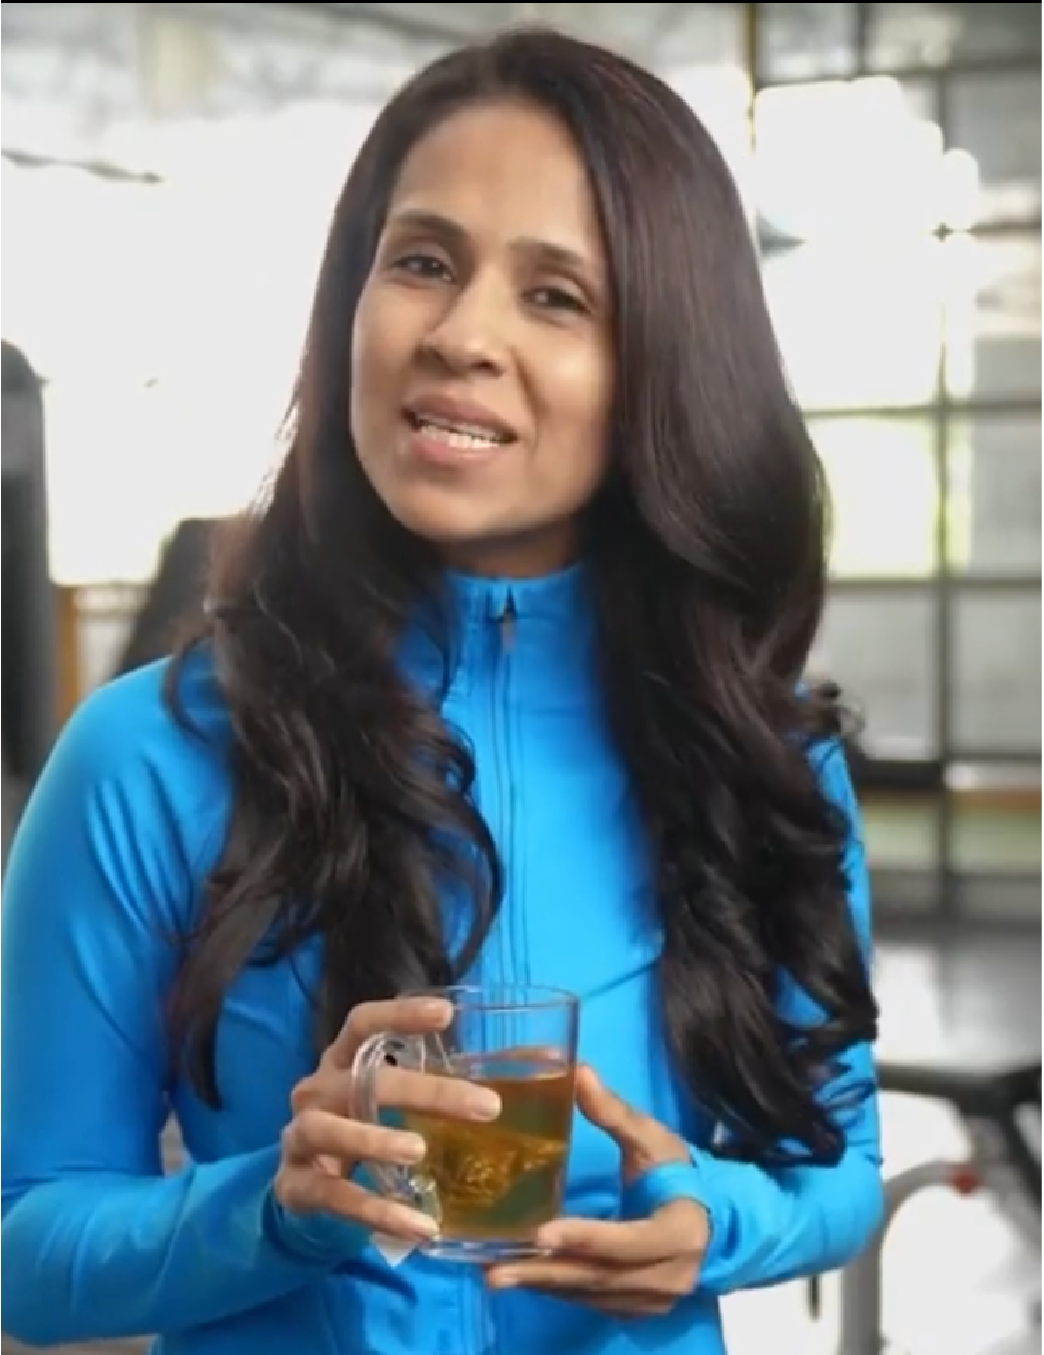 Himalayan Green Tea for Weight Loss- Slim Easy - The Pahadi Story 